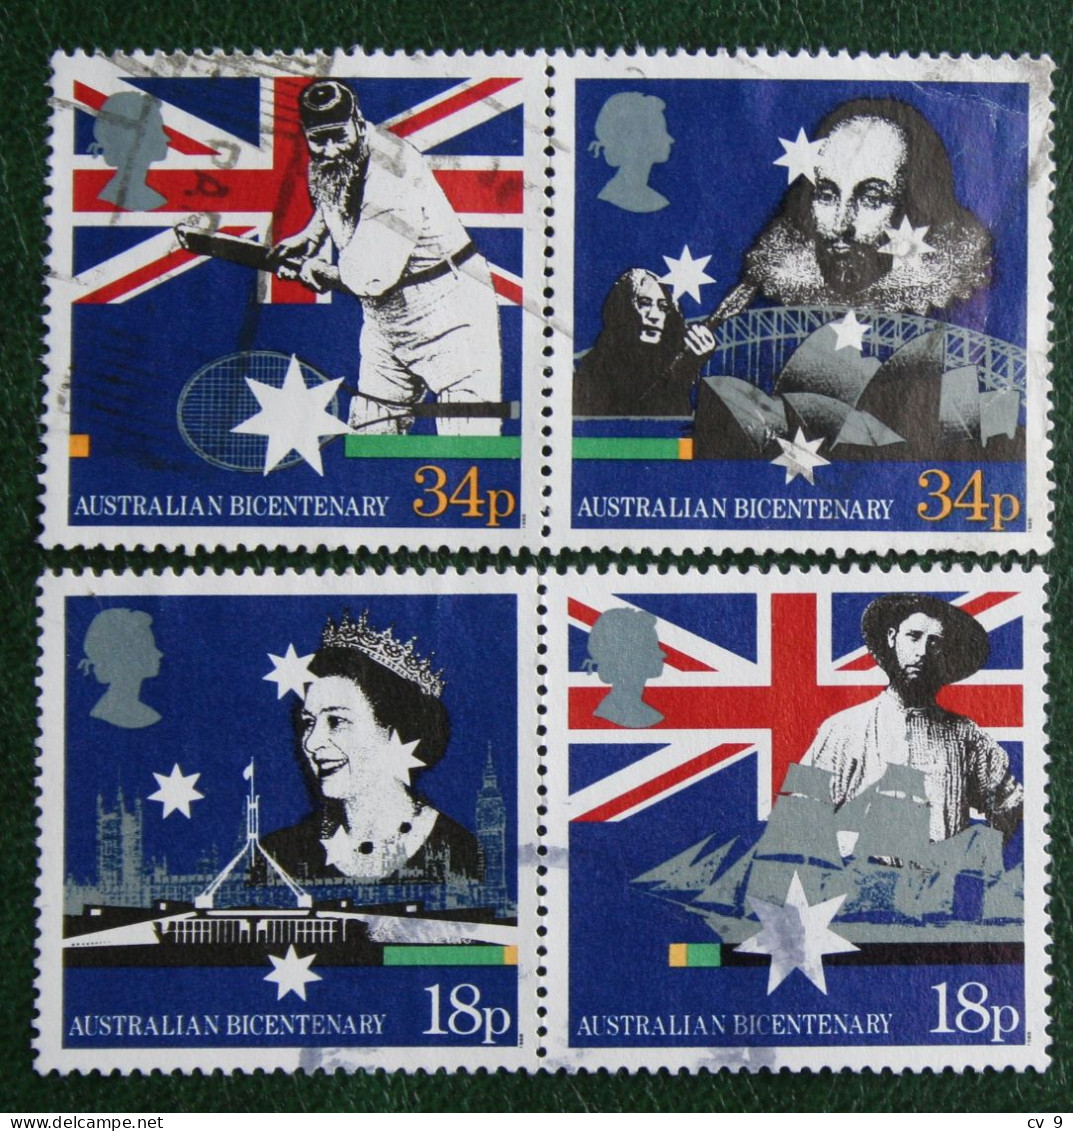 AUSTRALIAN BICENTENARY (Mi 1151-1154) 1988 Used Gebruikt Oblitere ENGLAND GRANDE-BRETAGNE GB GREAT BRITAIN - Used Stamps